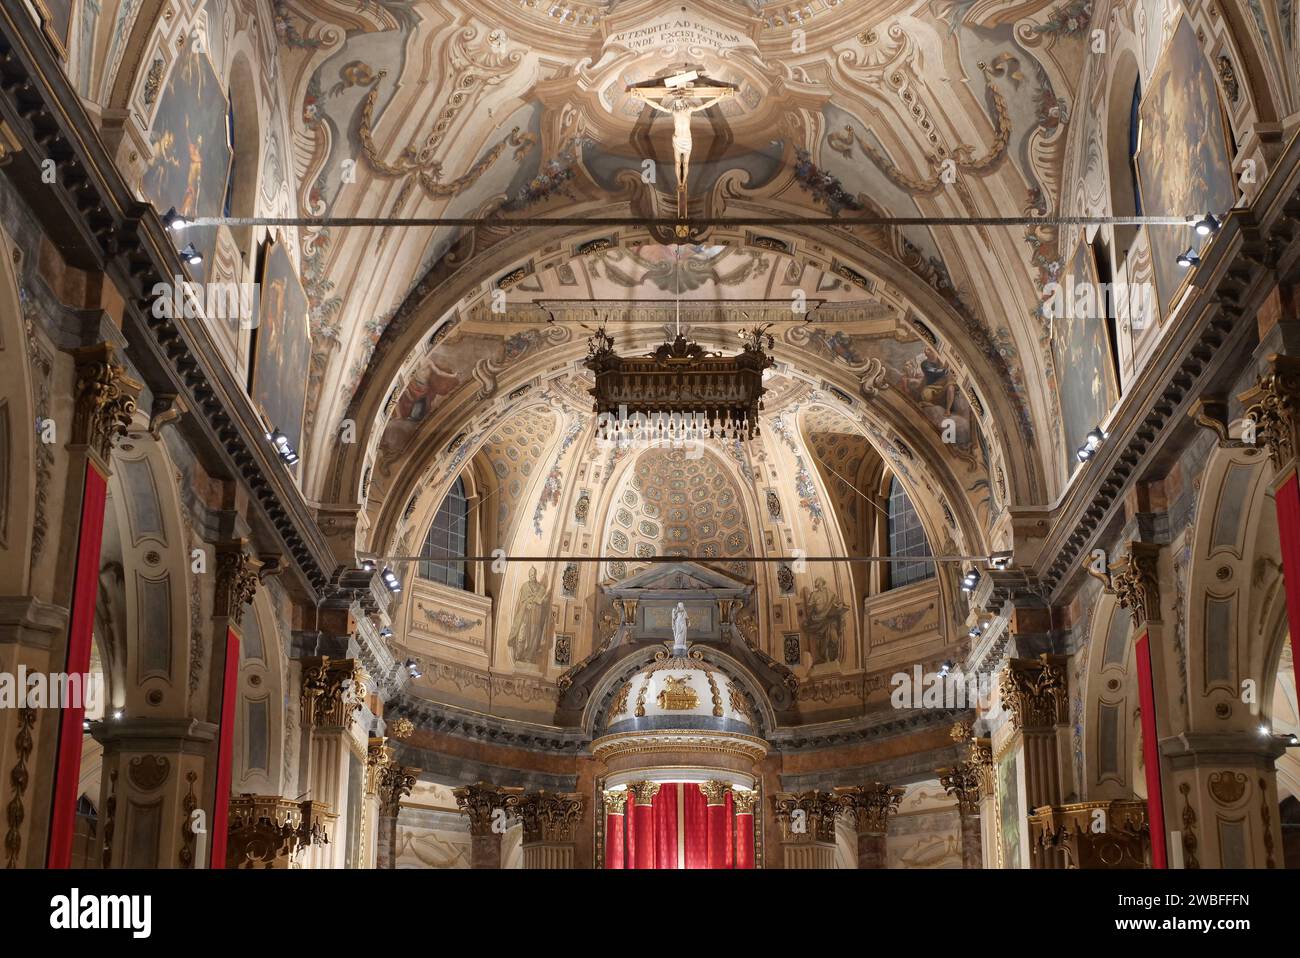 Interieur of San Martino basilic in Treviglio, Bergamo, Italy Stock Photo